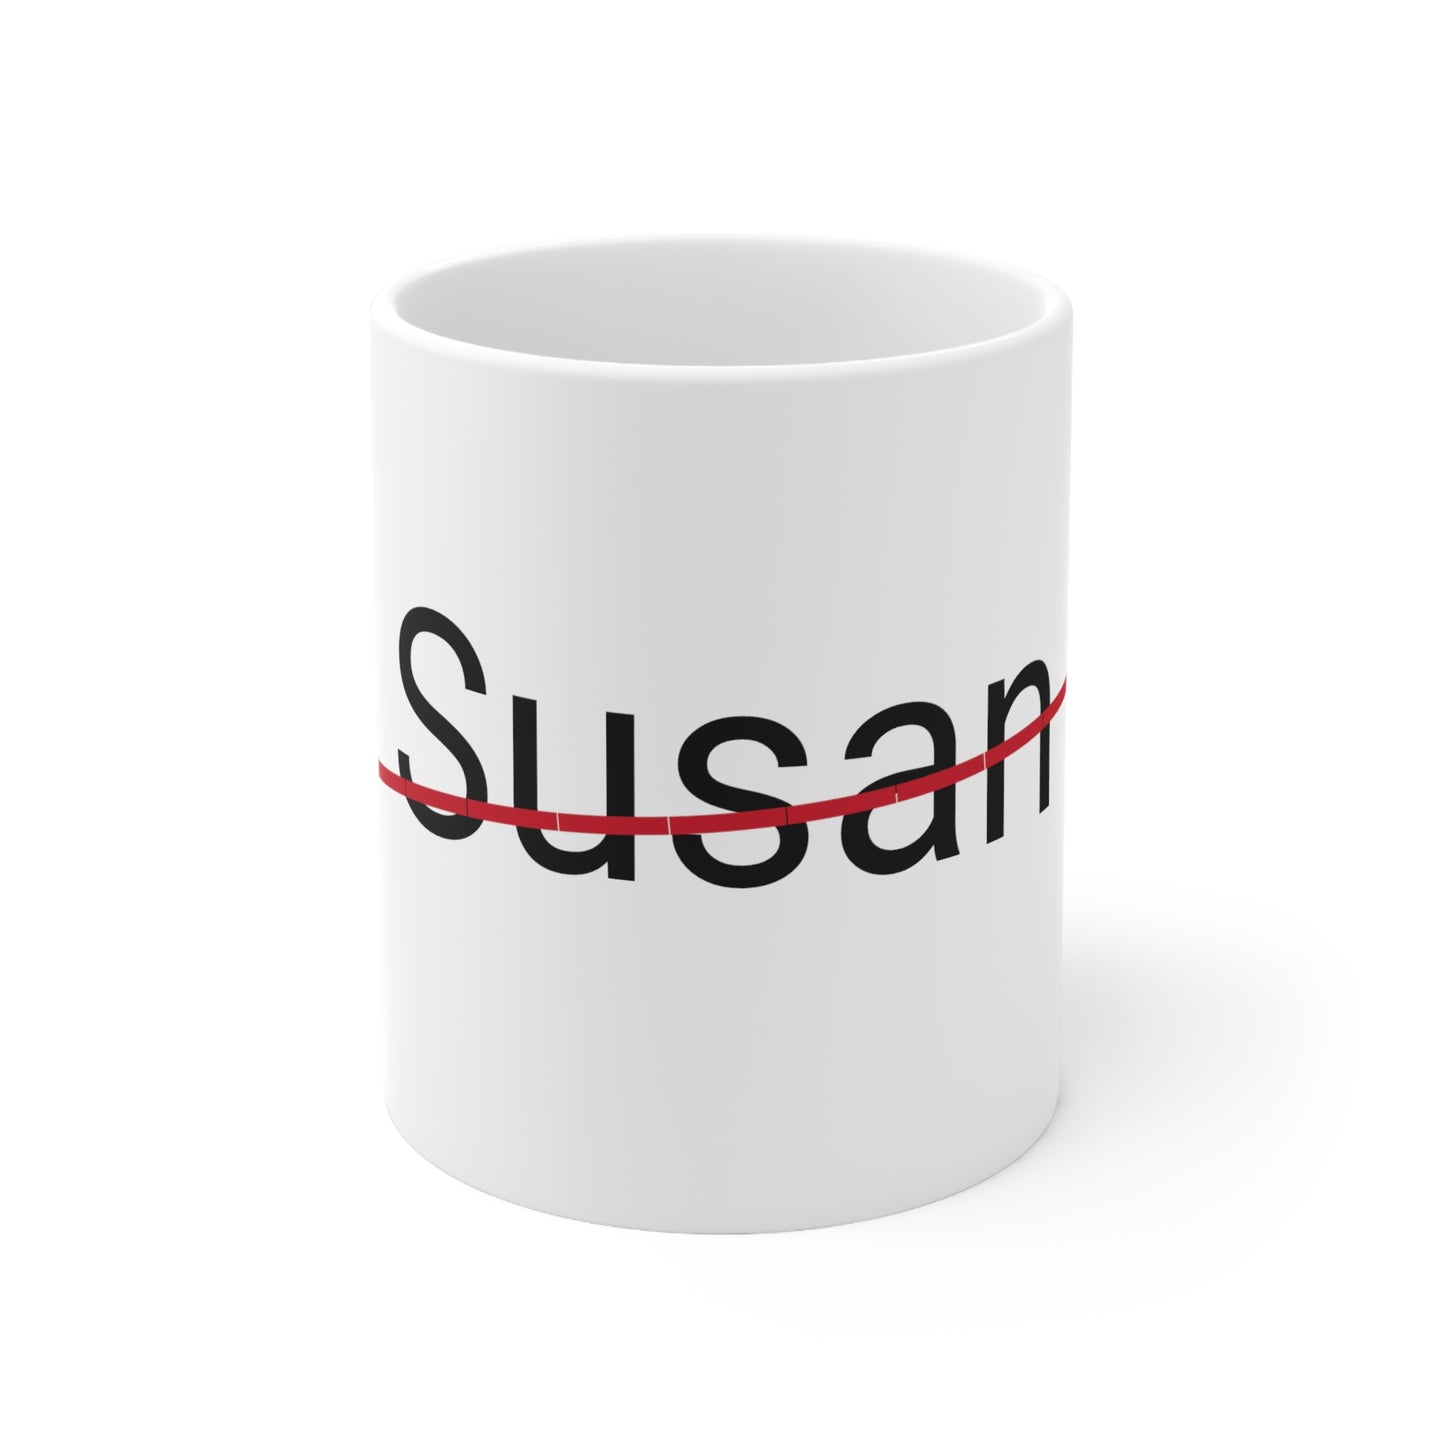 Susan - not my name coffee Mug 11oz